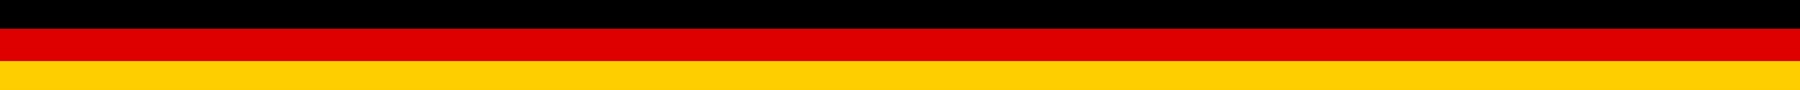 germany-immigration-flag-background